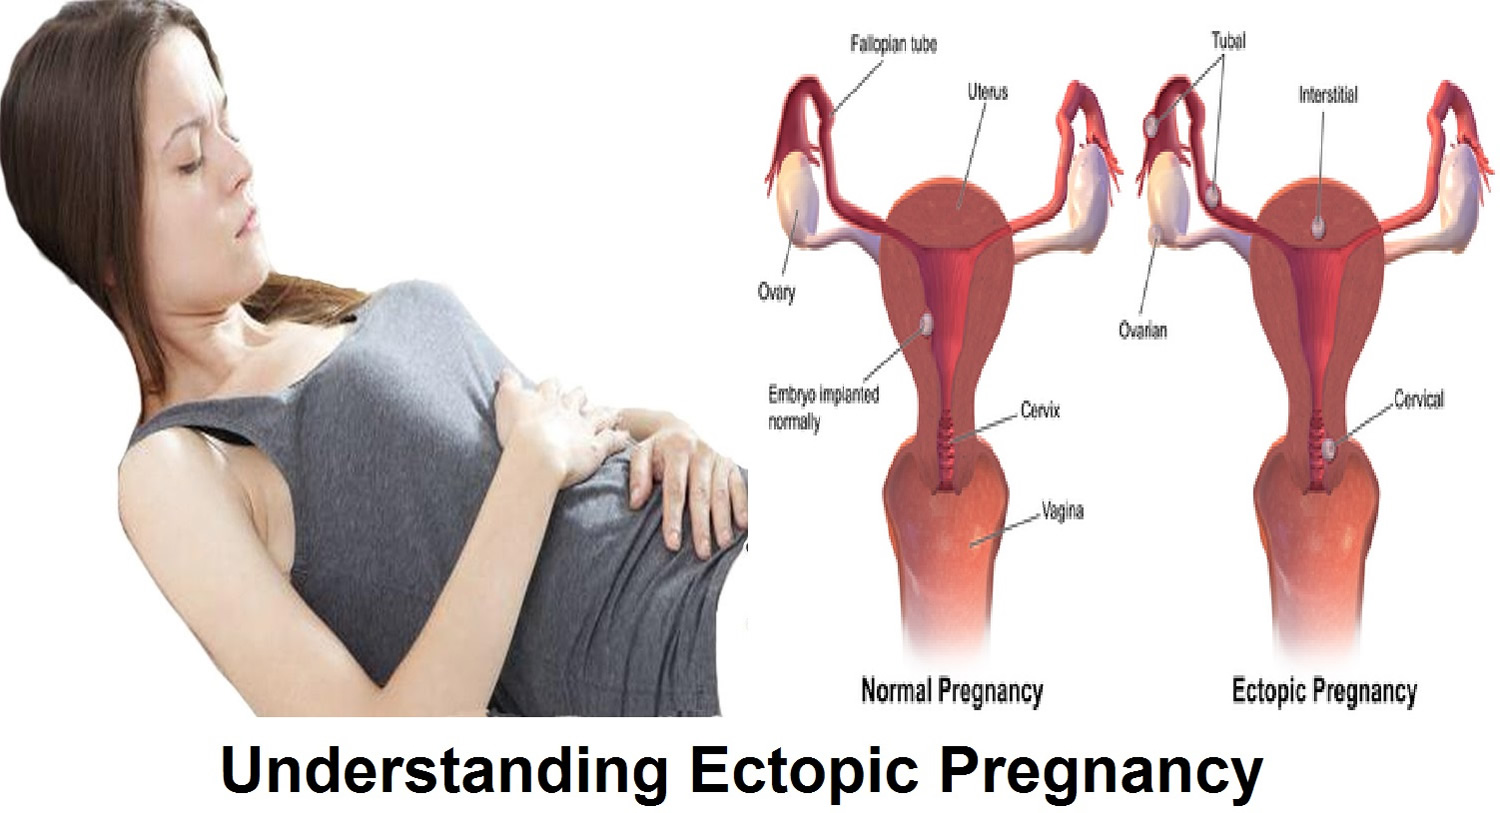 Ectopic Pregnancy - Causes, Signs, Symptoms, Diagnosis, Treatment